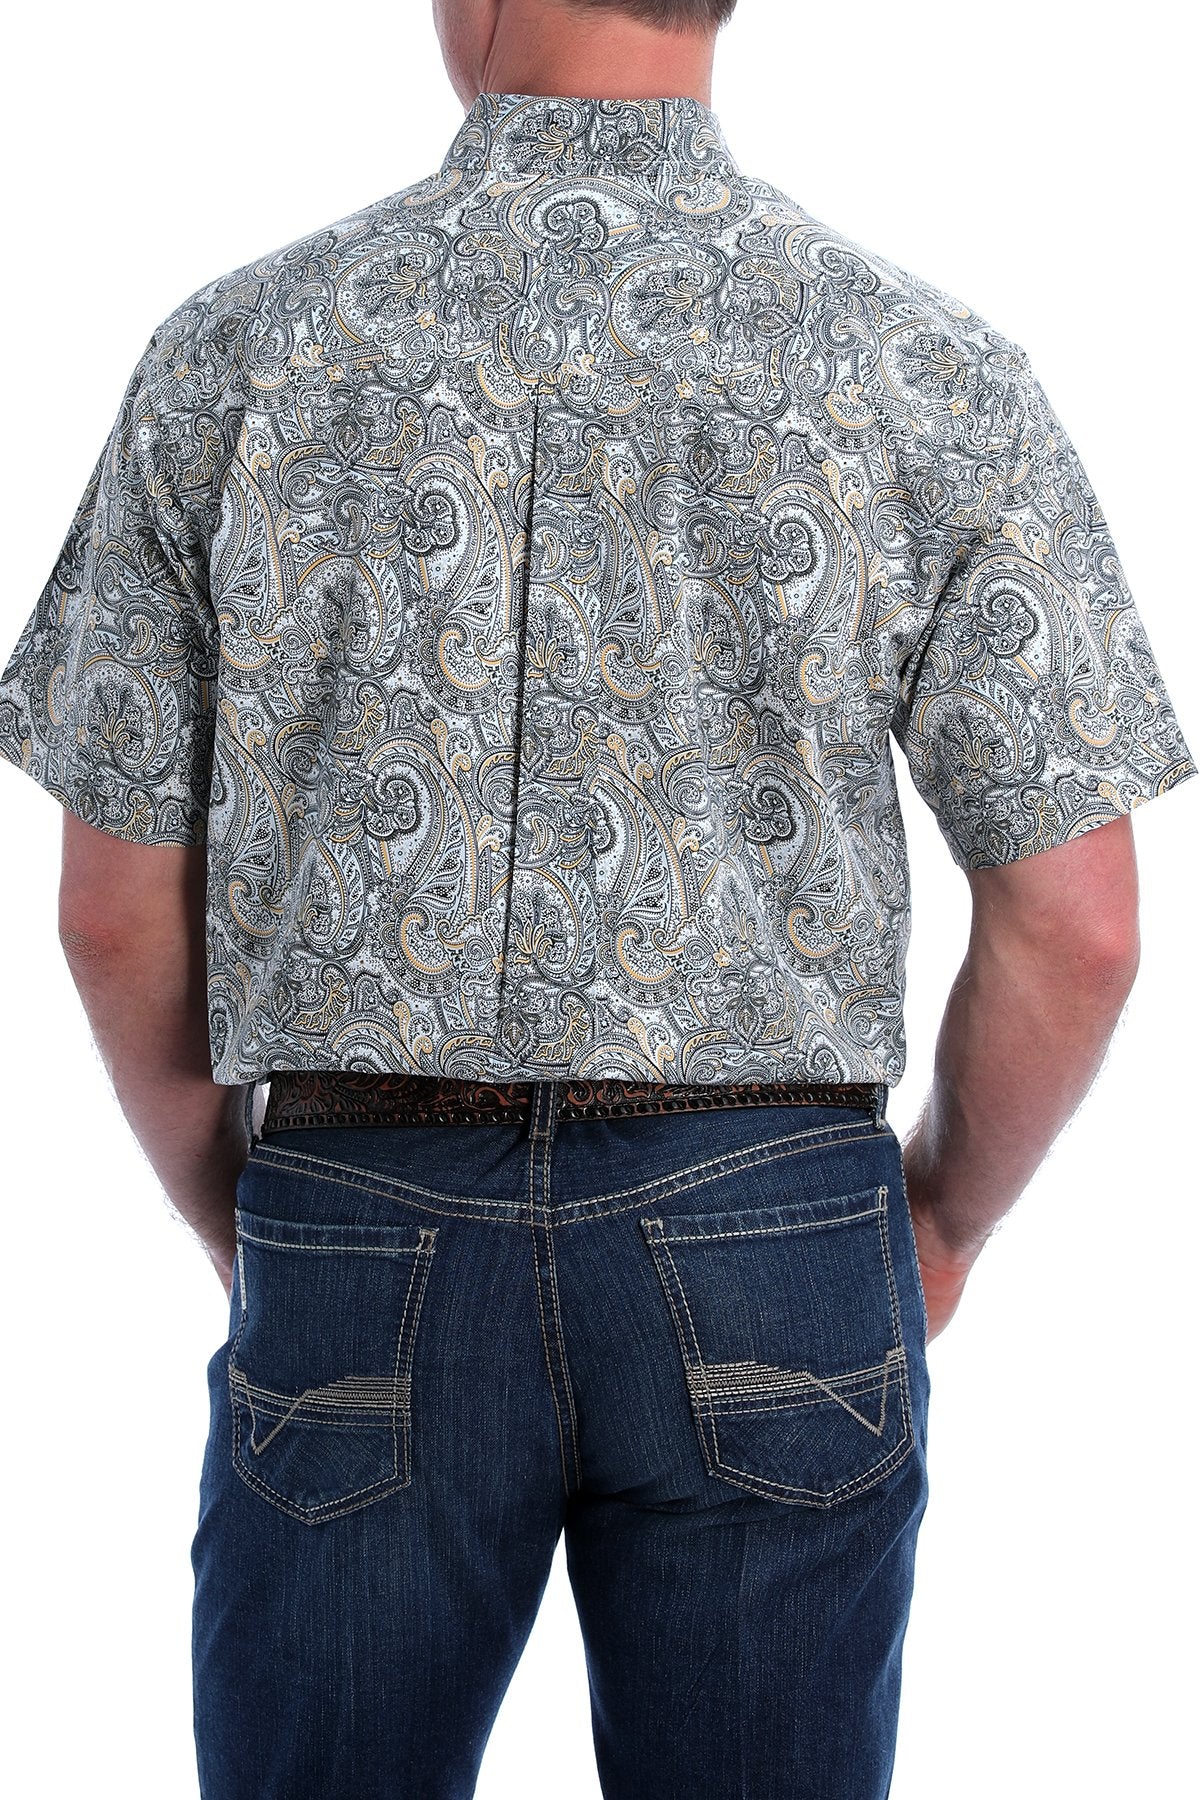 Cinch Mens Short Sleeved Shirt - Paisley print